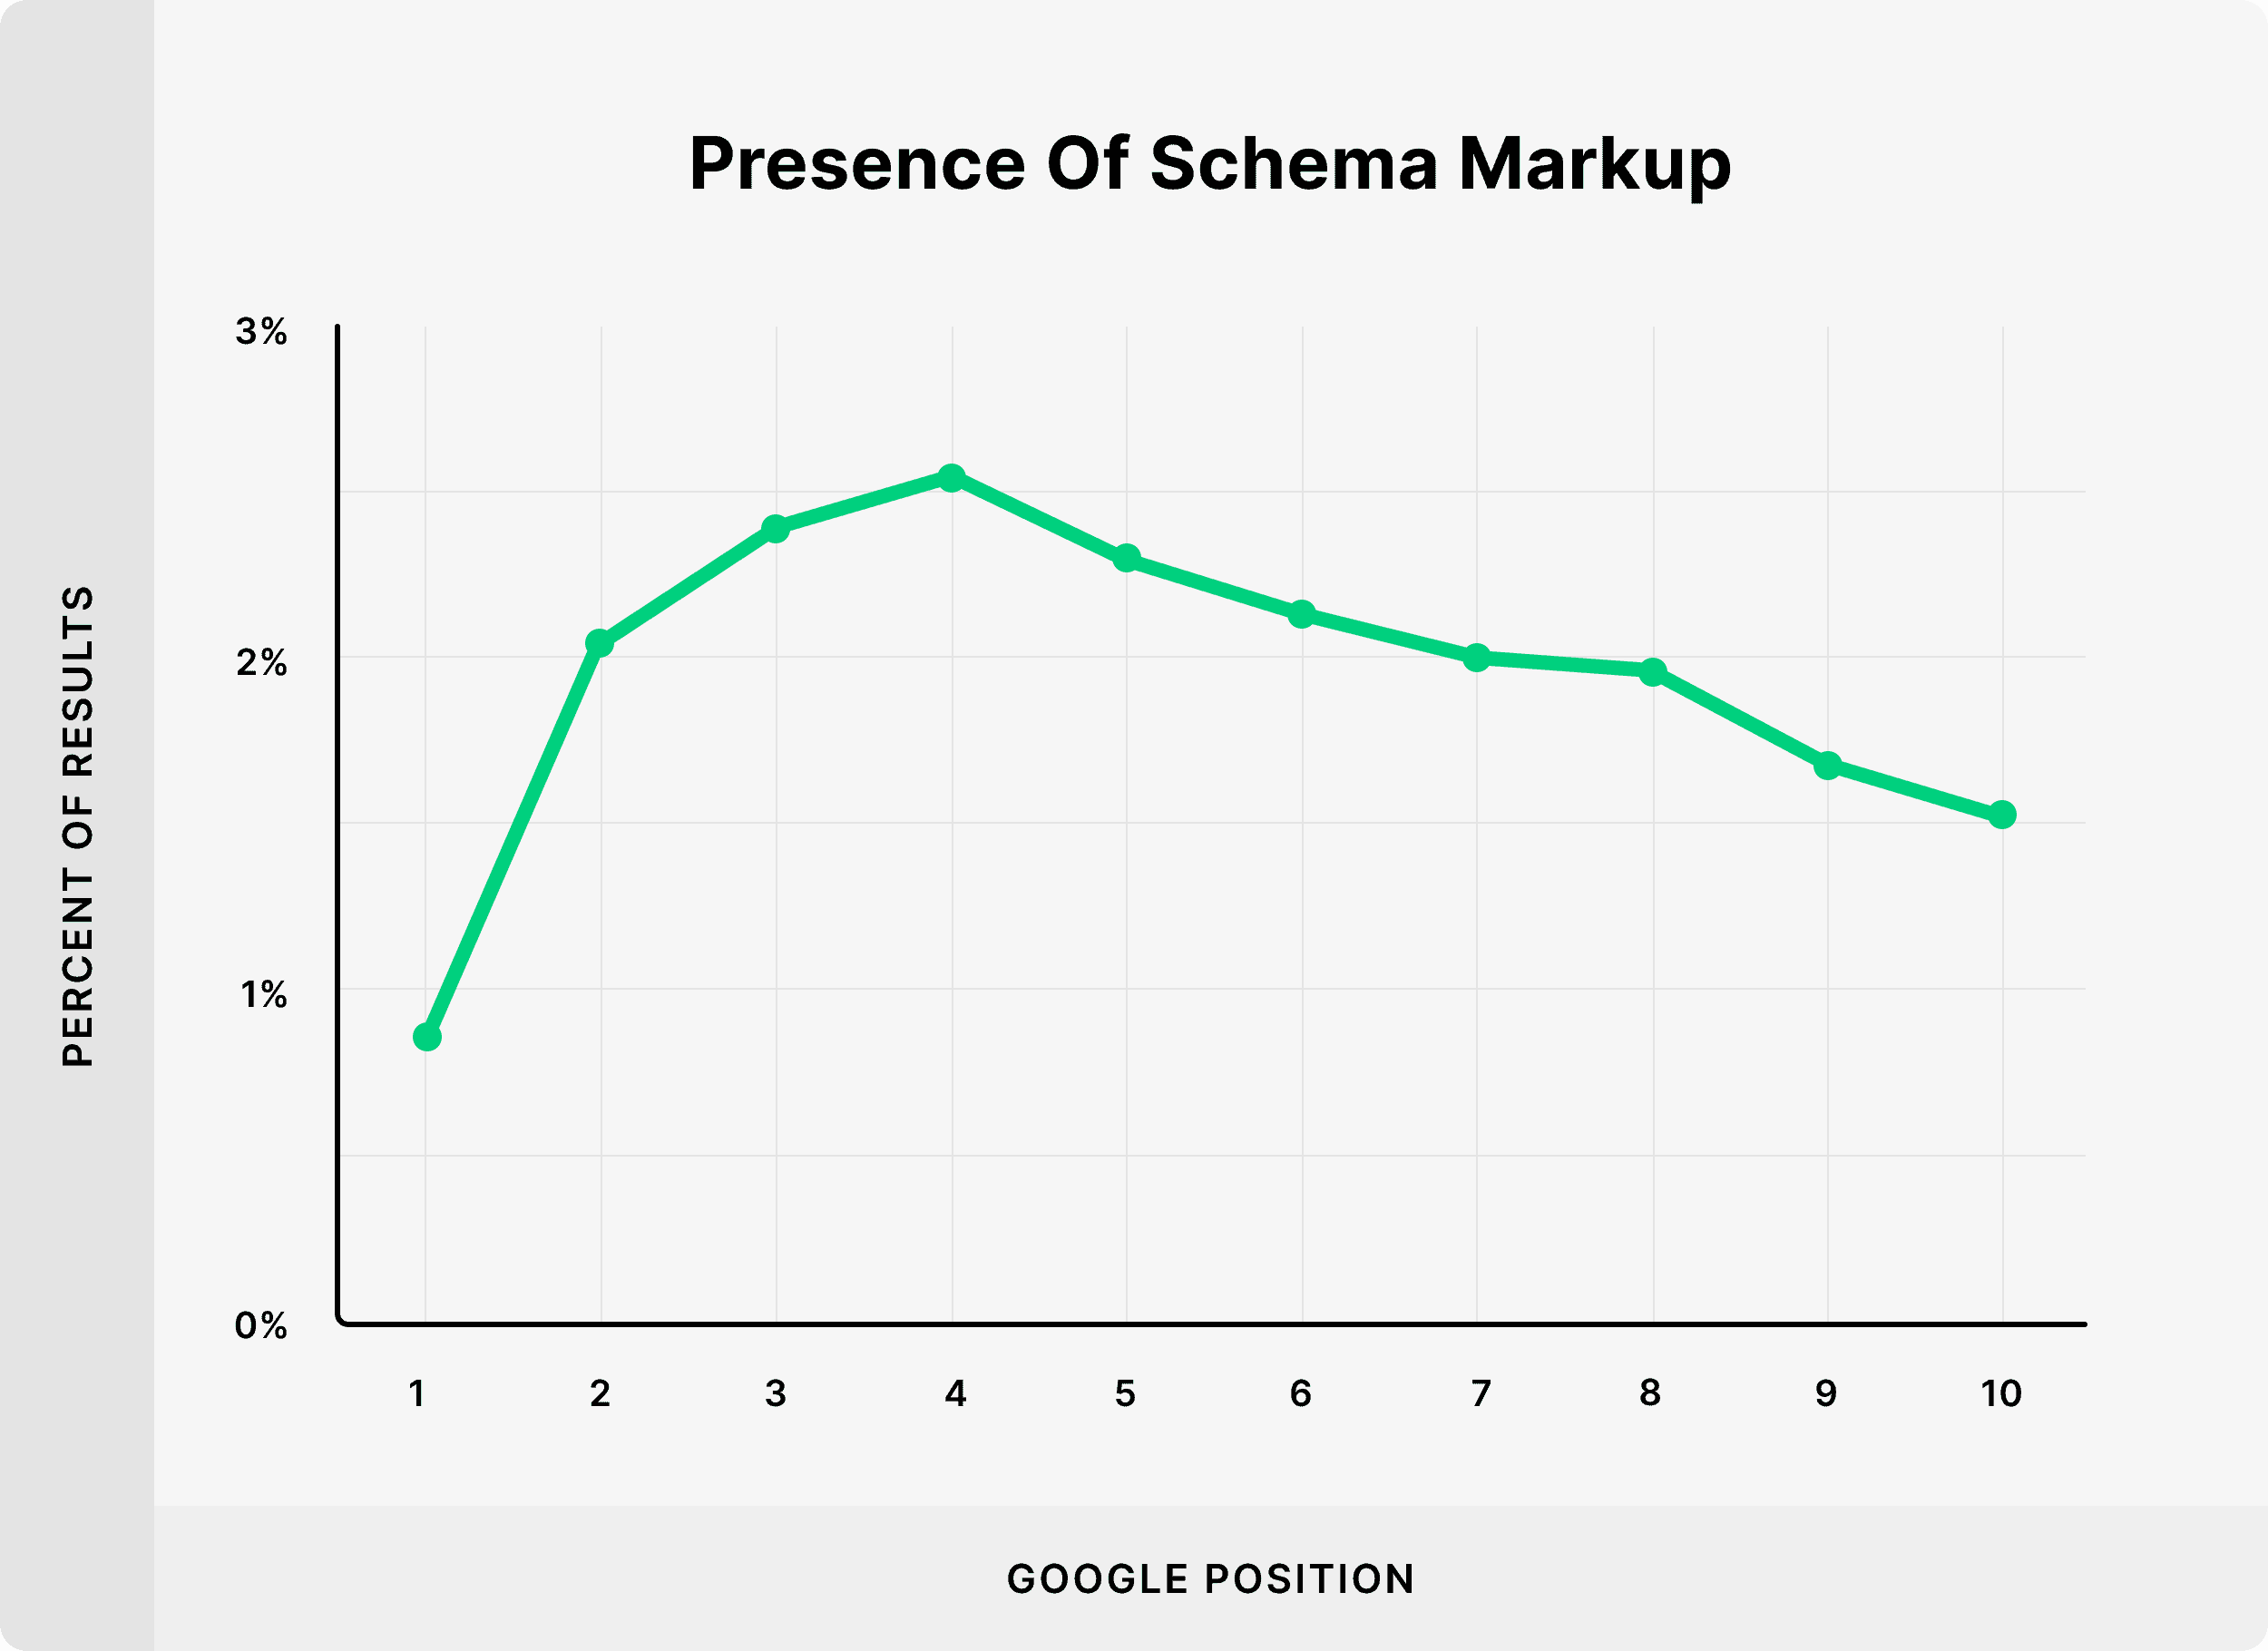 Presence of schema markup